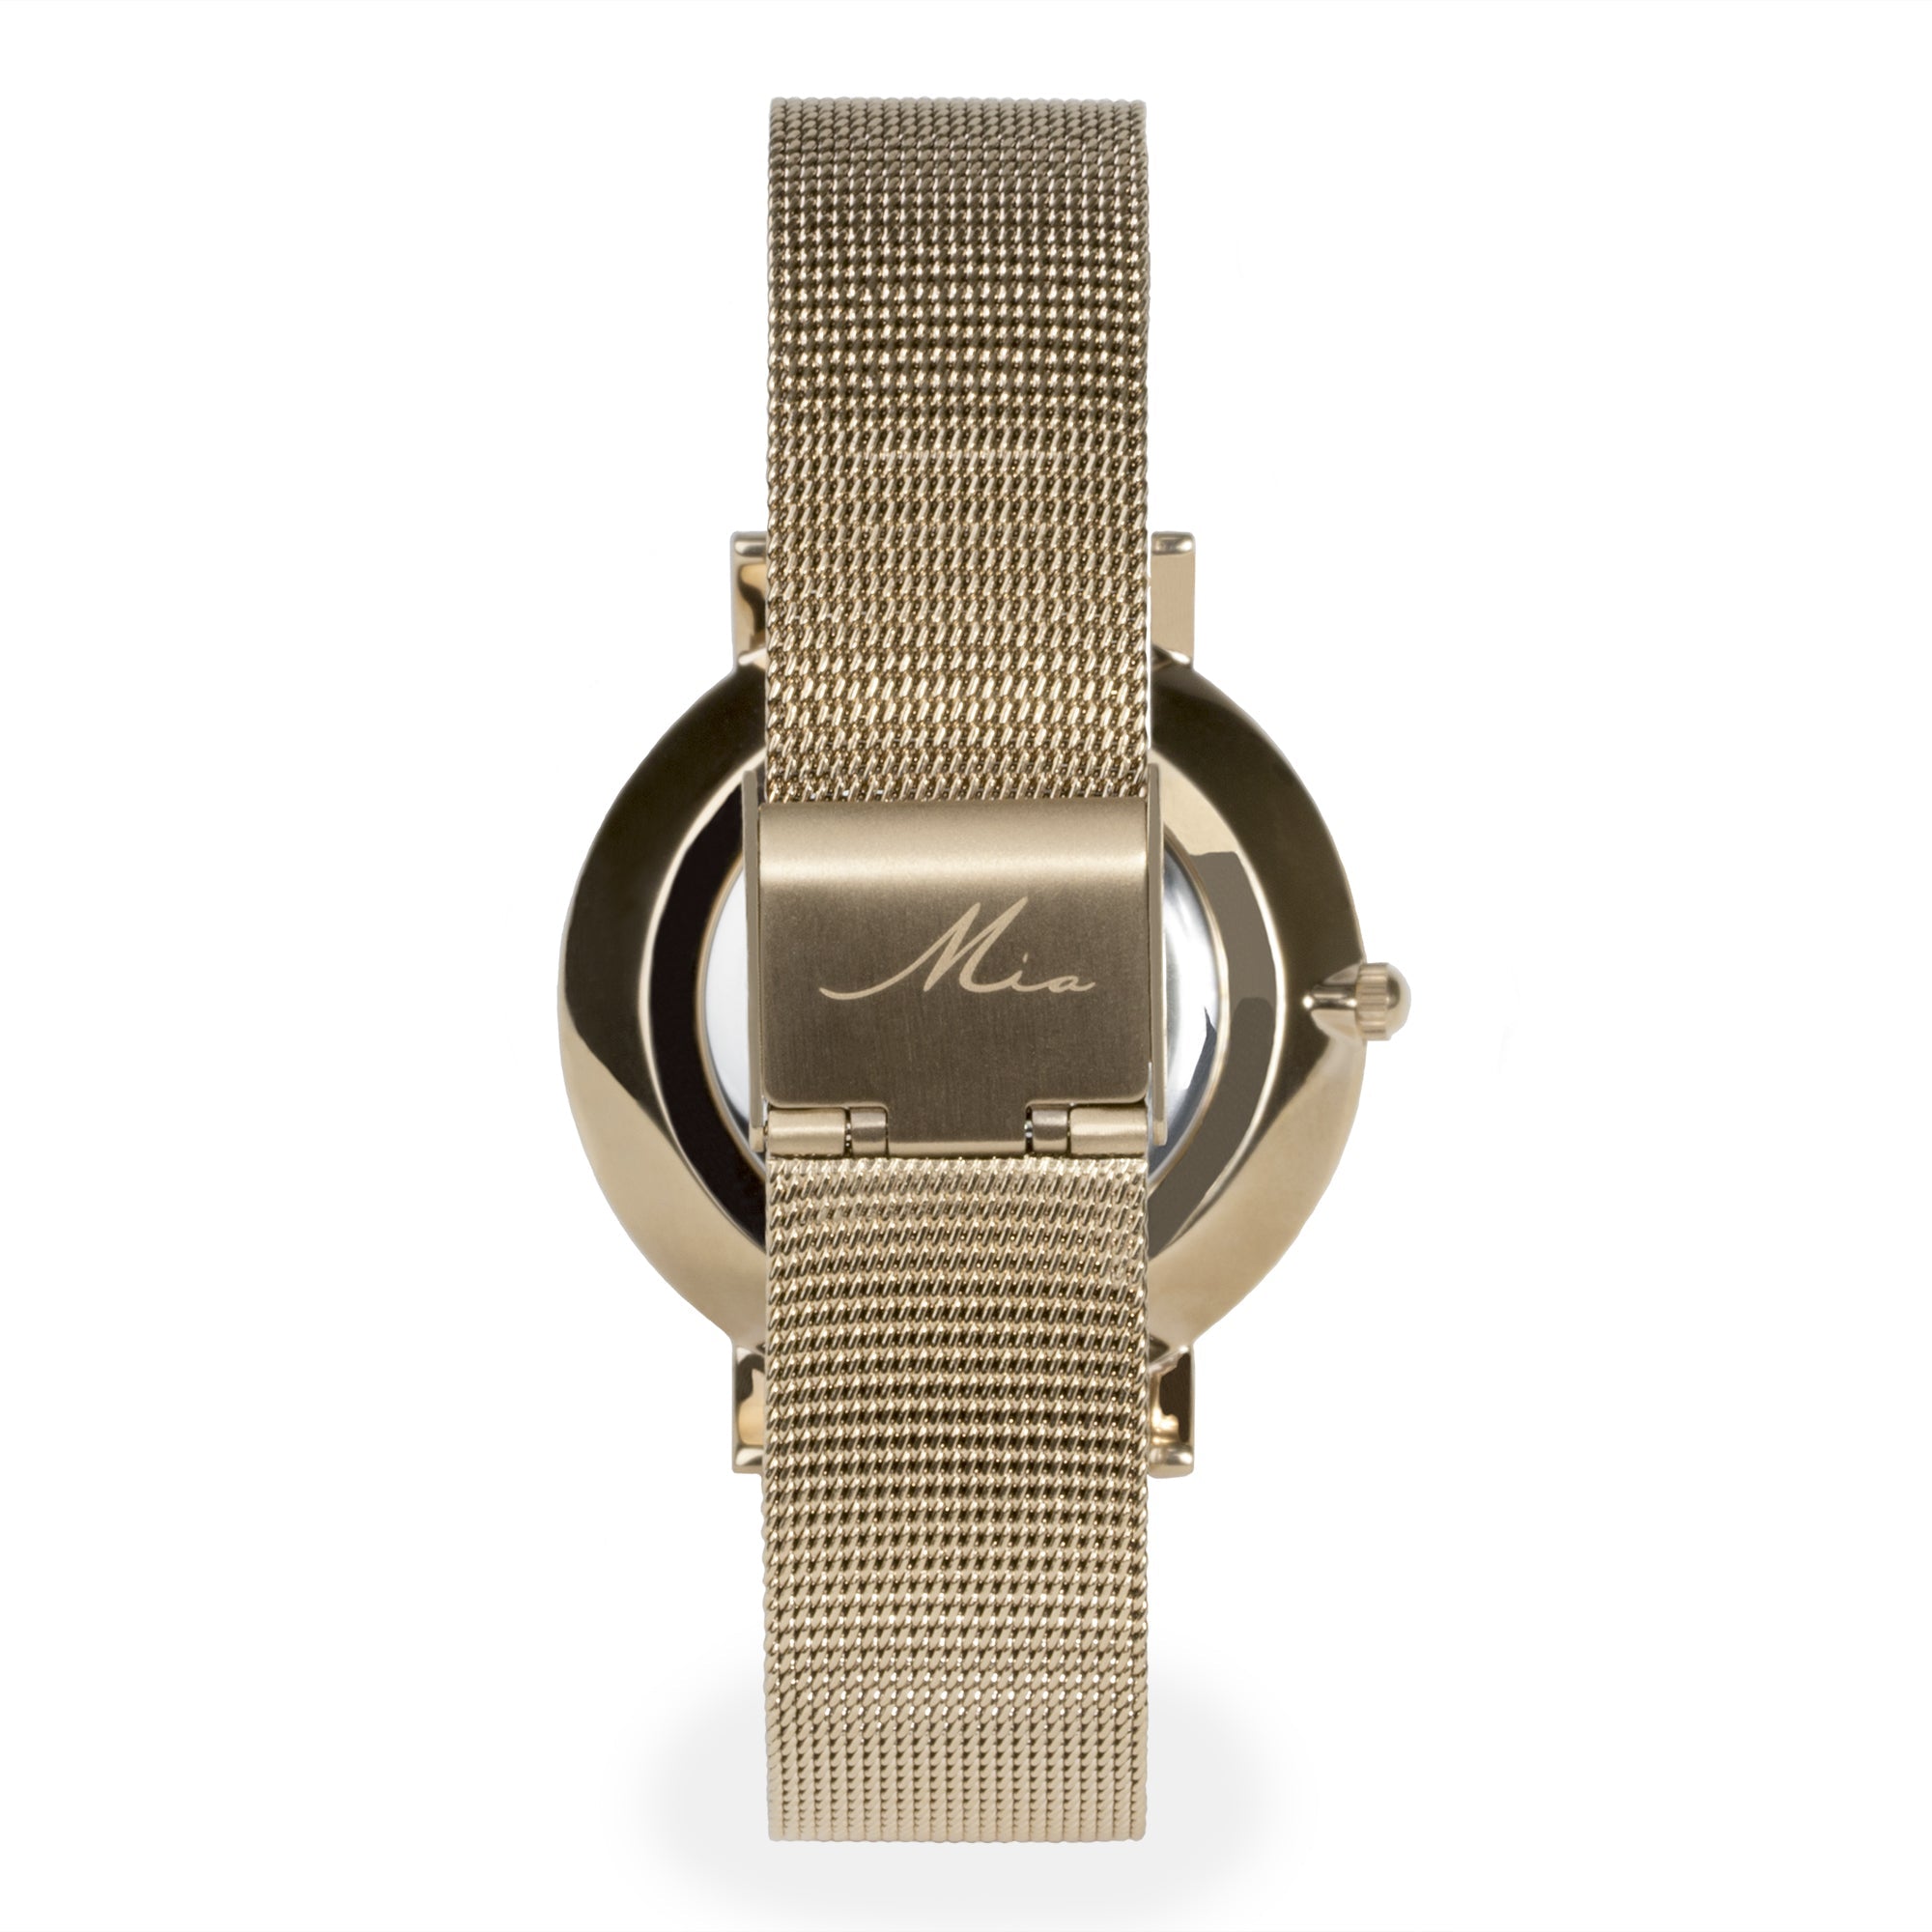 Buy Stainless steel MOP watch by Mia Bijoux